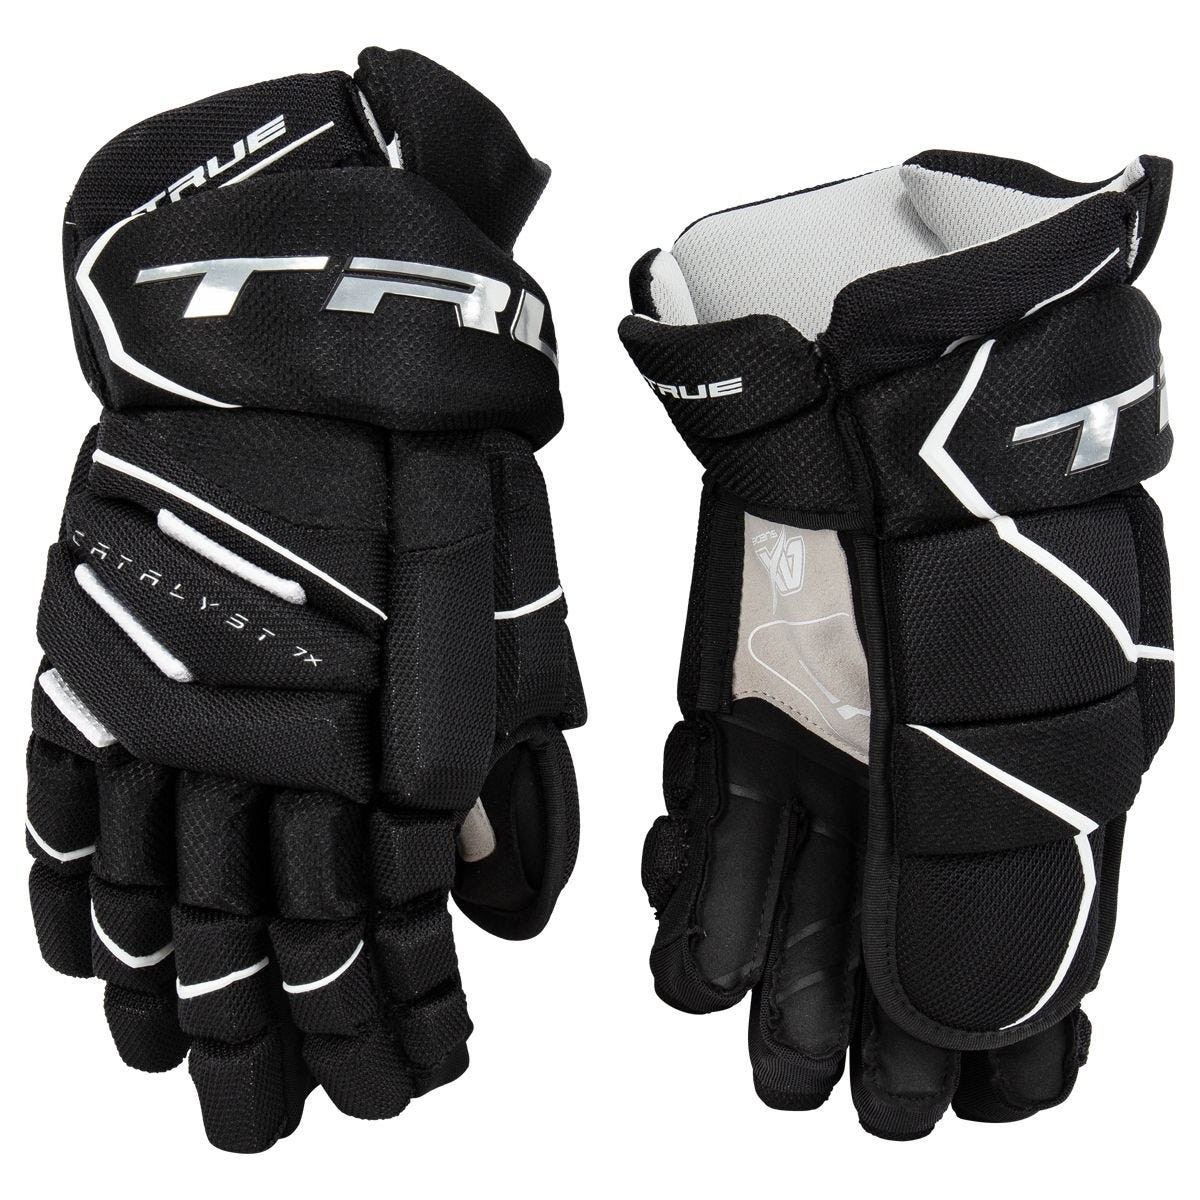 TRUE Catalyst 7X Senior Ice Hockey Gloves